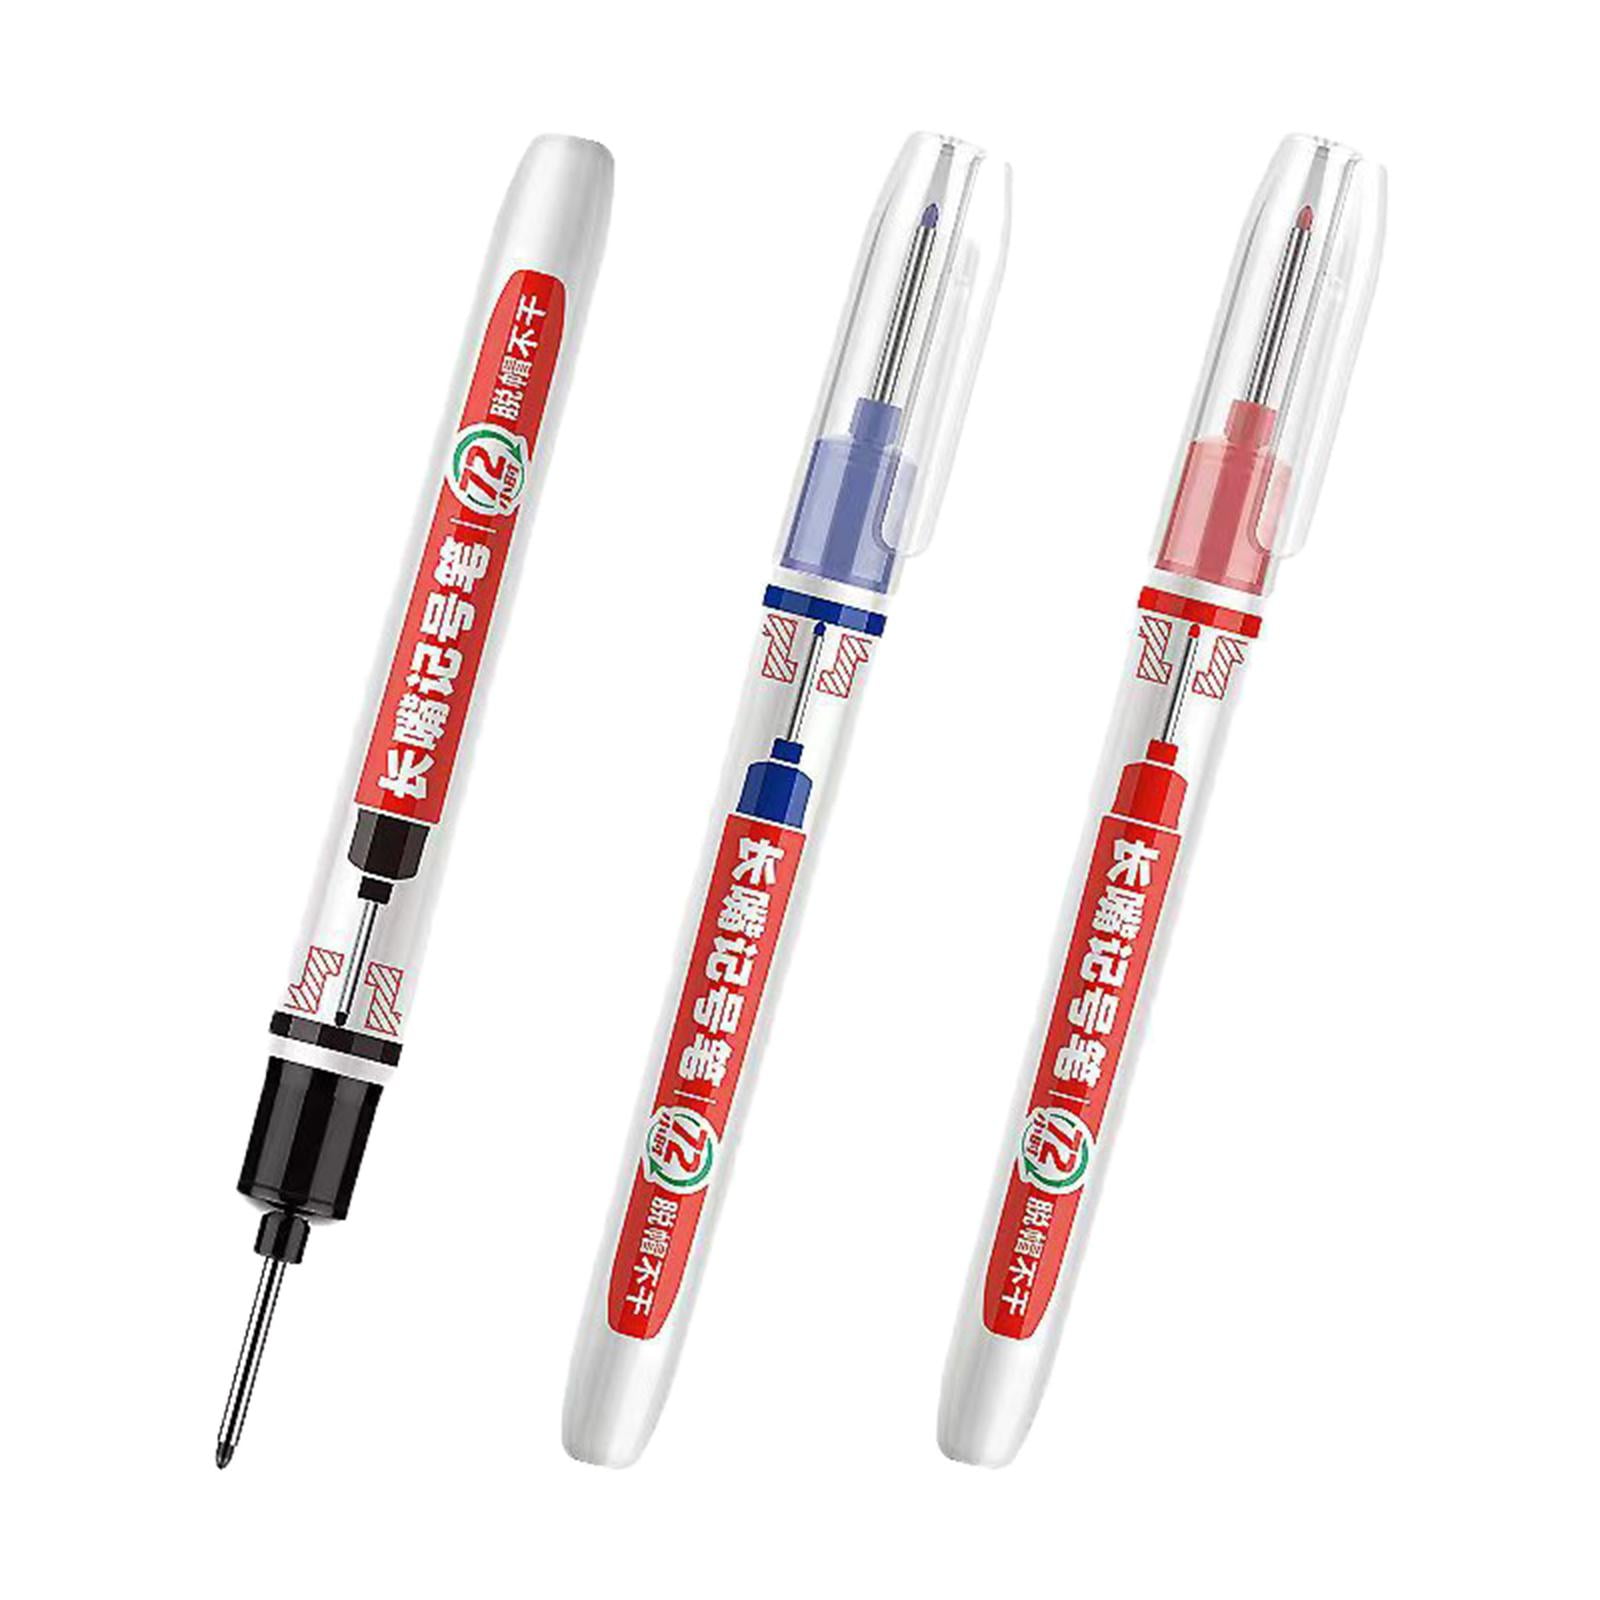 Morning Glory Pro Mach Roller Ball Pen (12 Pcs, 6 Pcs) 0.38 mm Fine Point Tip (Assorted Colors (6 pcs)) New Upgrade Model